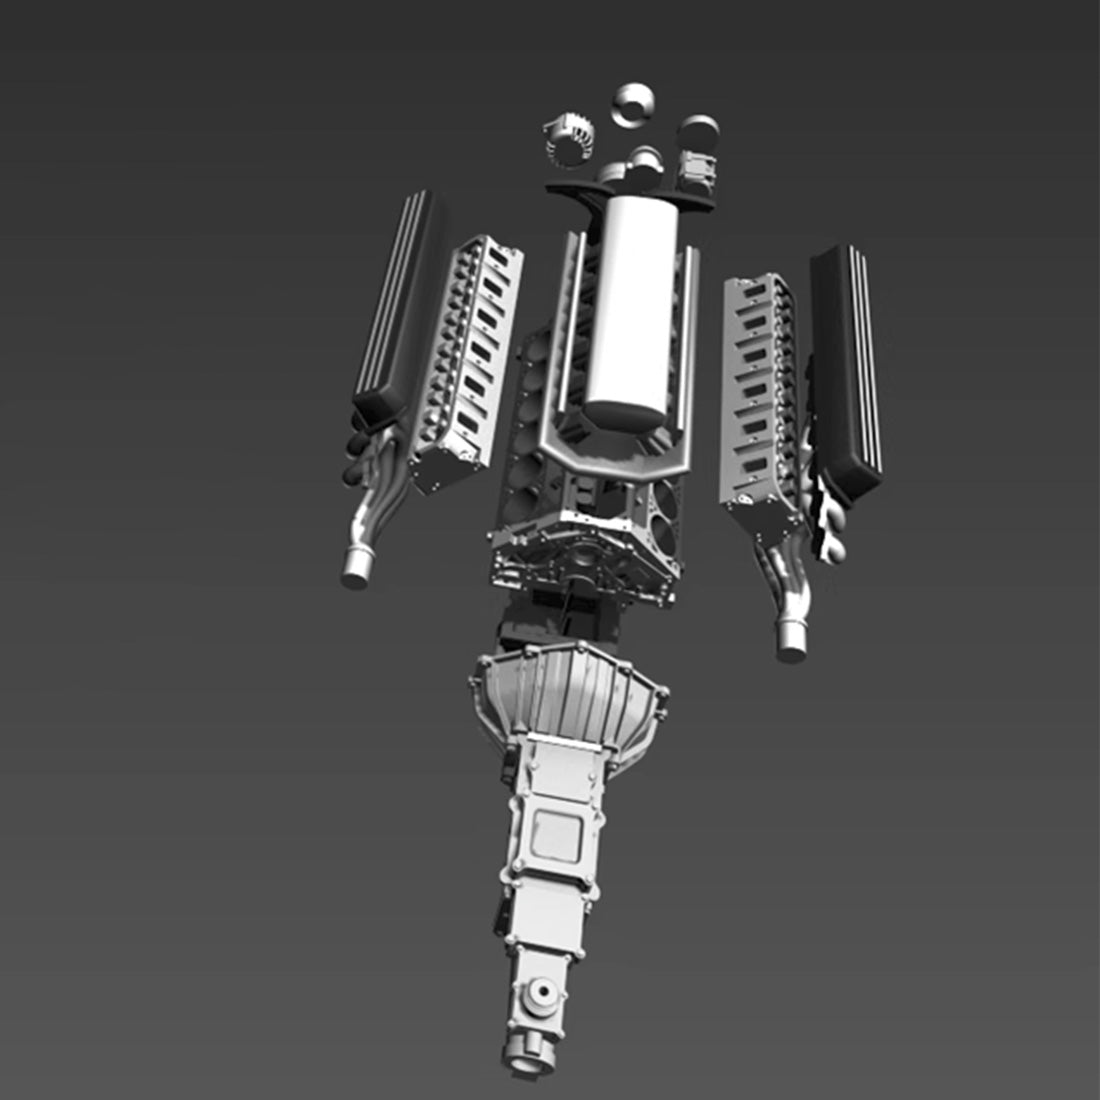 1/18 High-Precision Mini V12 Engine Model + Gearbox Model DIY Assembly Display Toy (20PCS/Static Version) enginediyshop